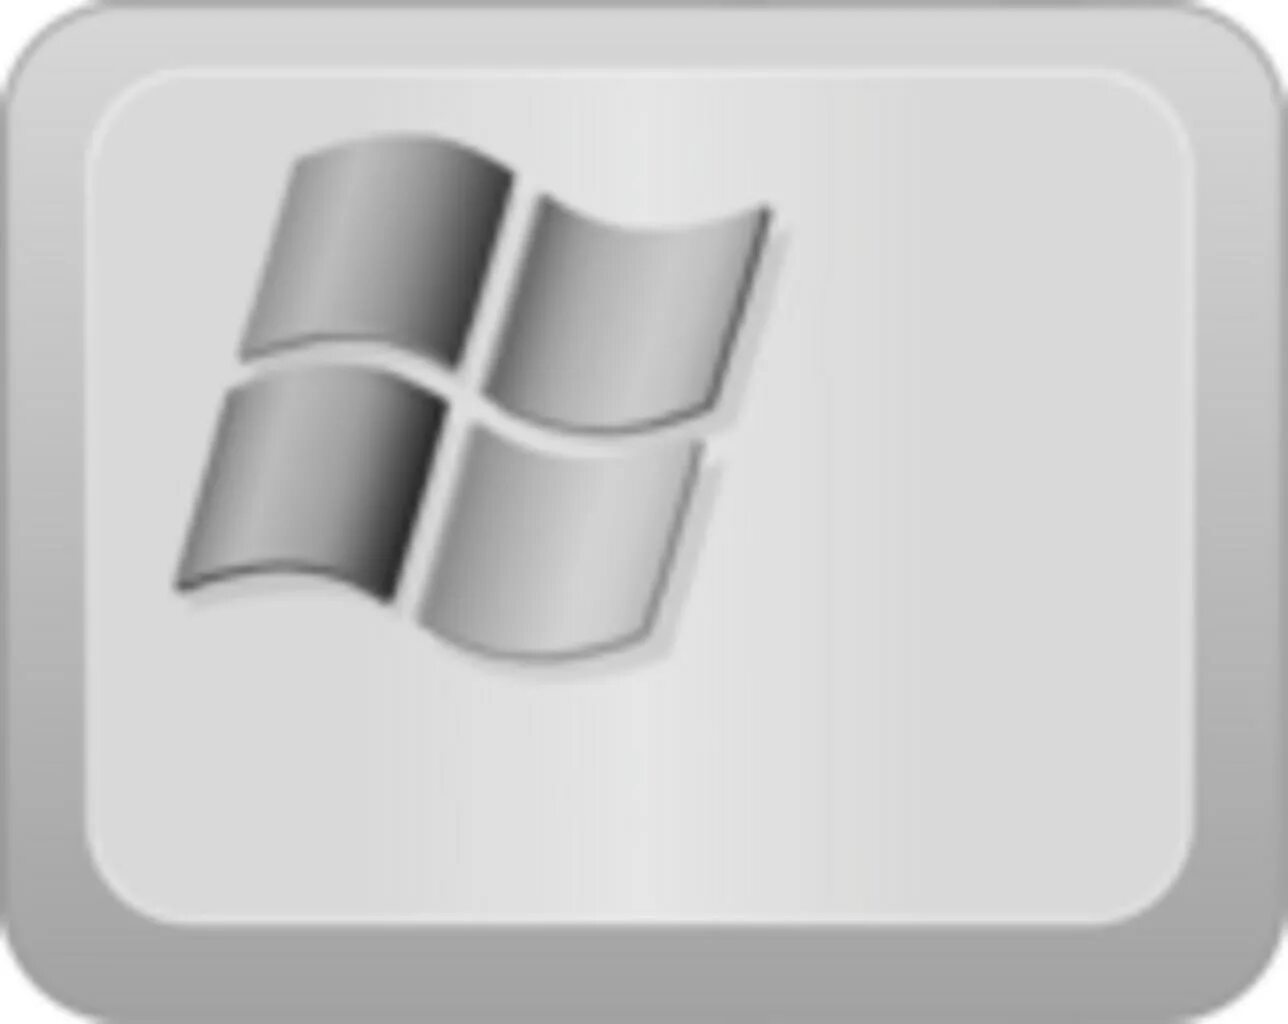 Нажми windows клавиши windows. Значок Windows. Клавиша виндовс. Значок Windows на клавиатуре. Windows Vista значок.